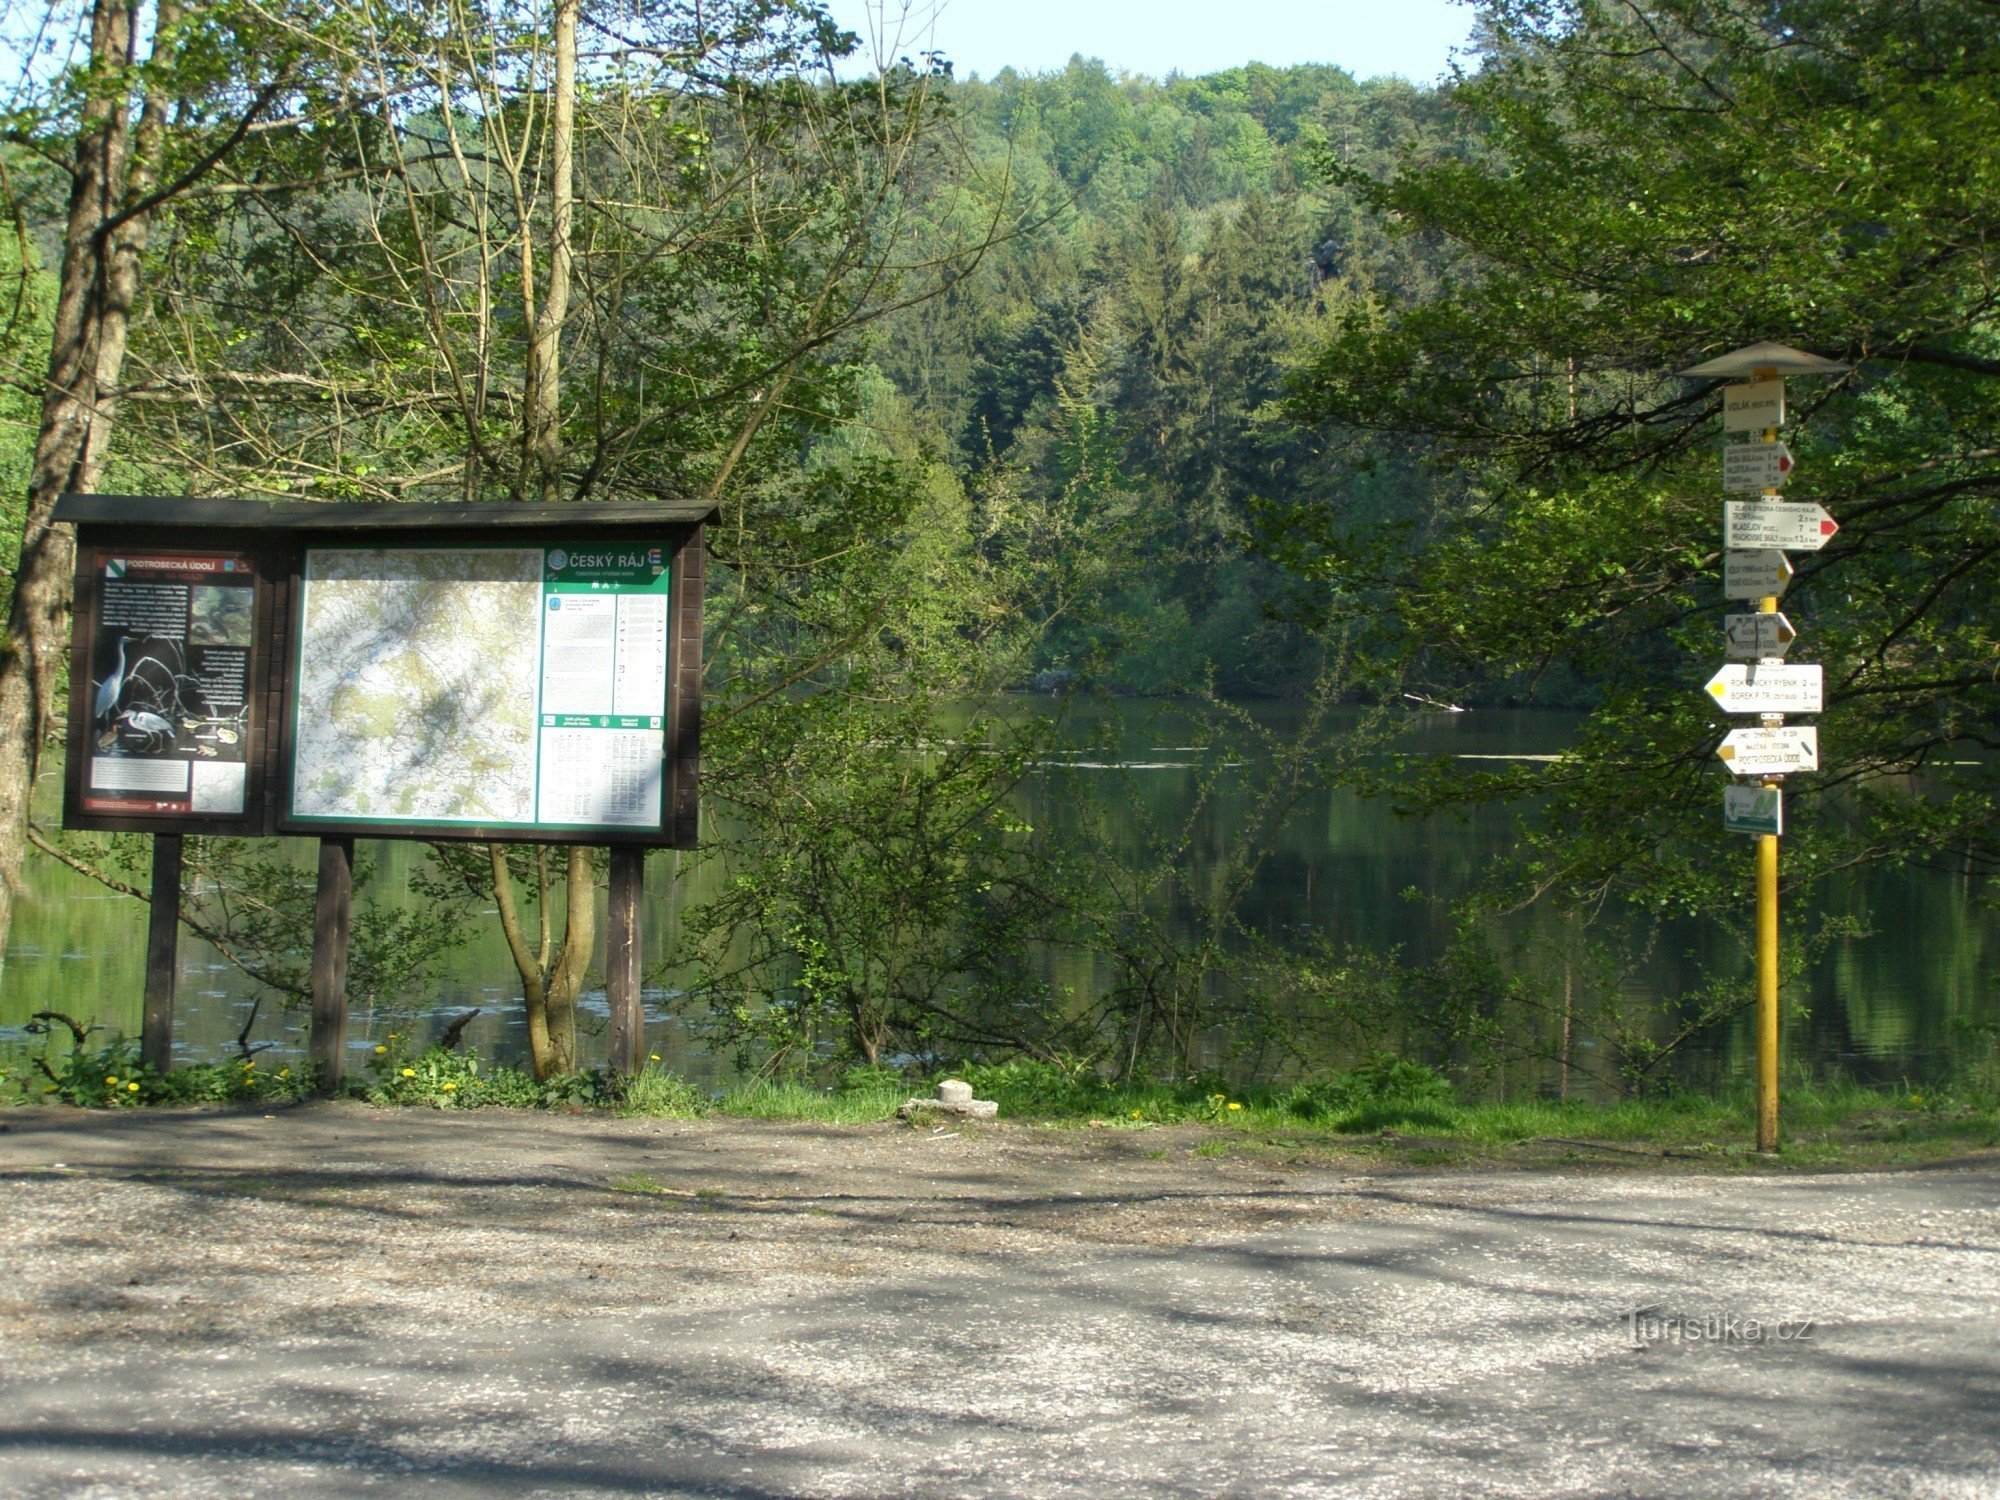 turistické rozcestí u rybníku Vidlák